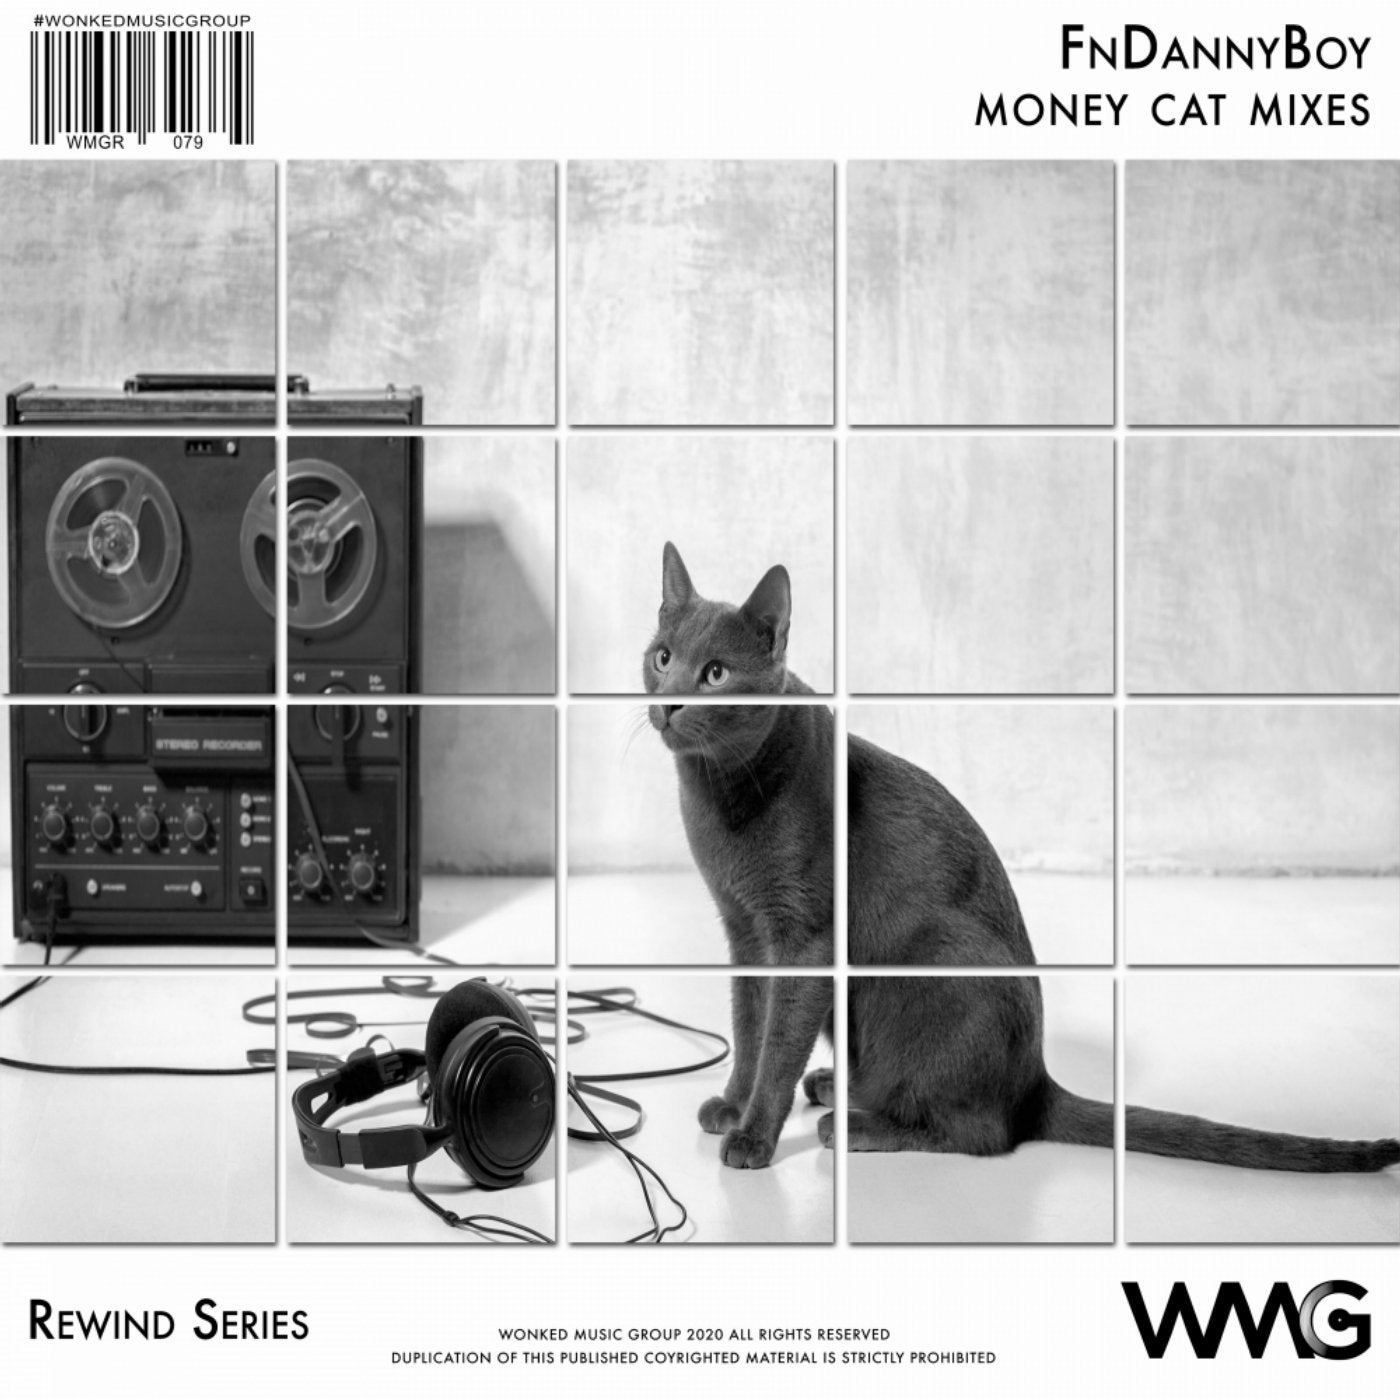 Rewind Series: FnDannyBoy - Money Cat Mixes